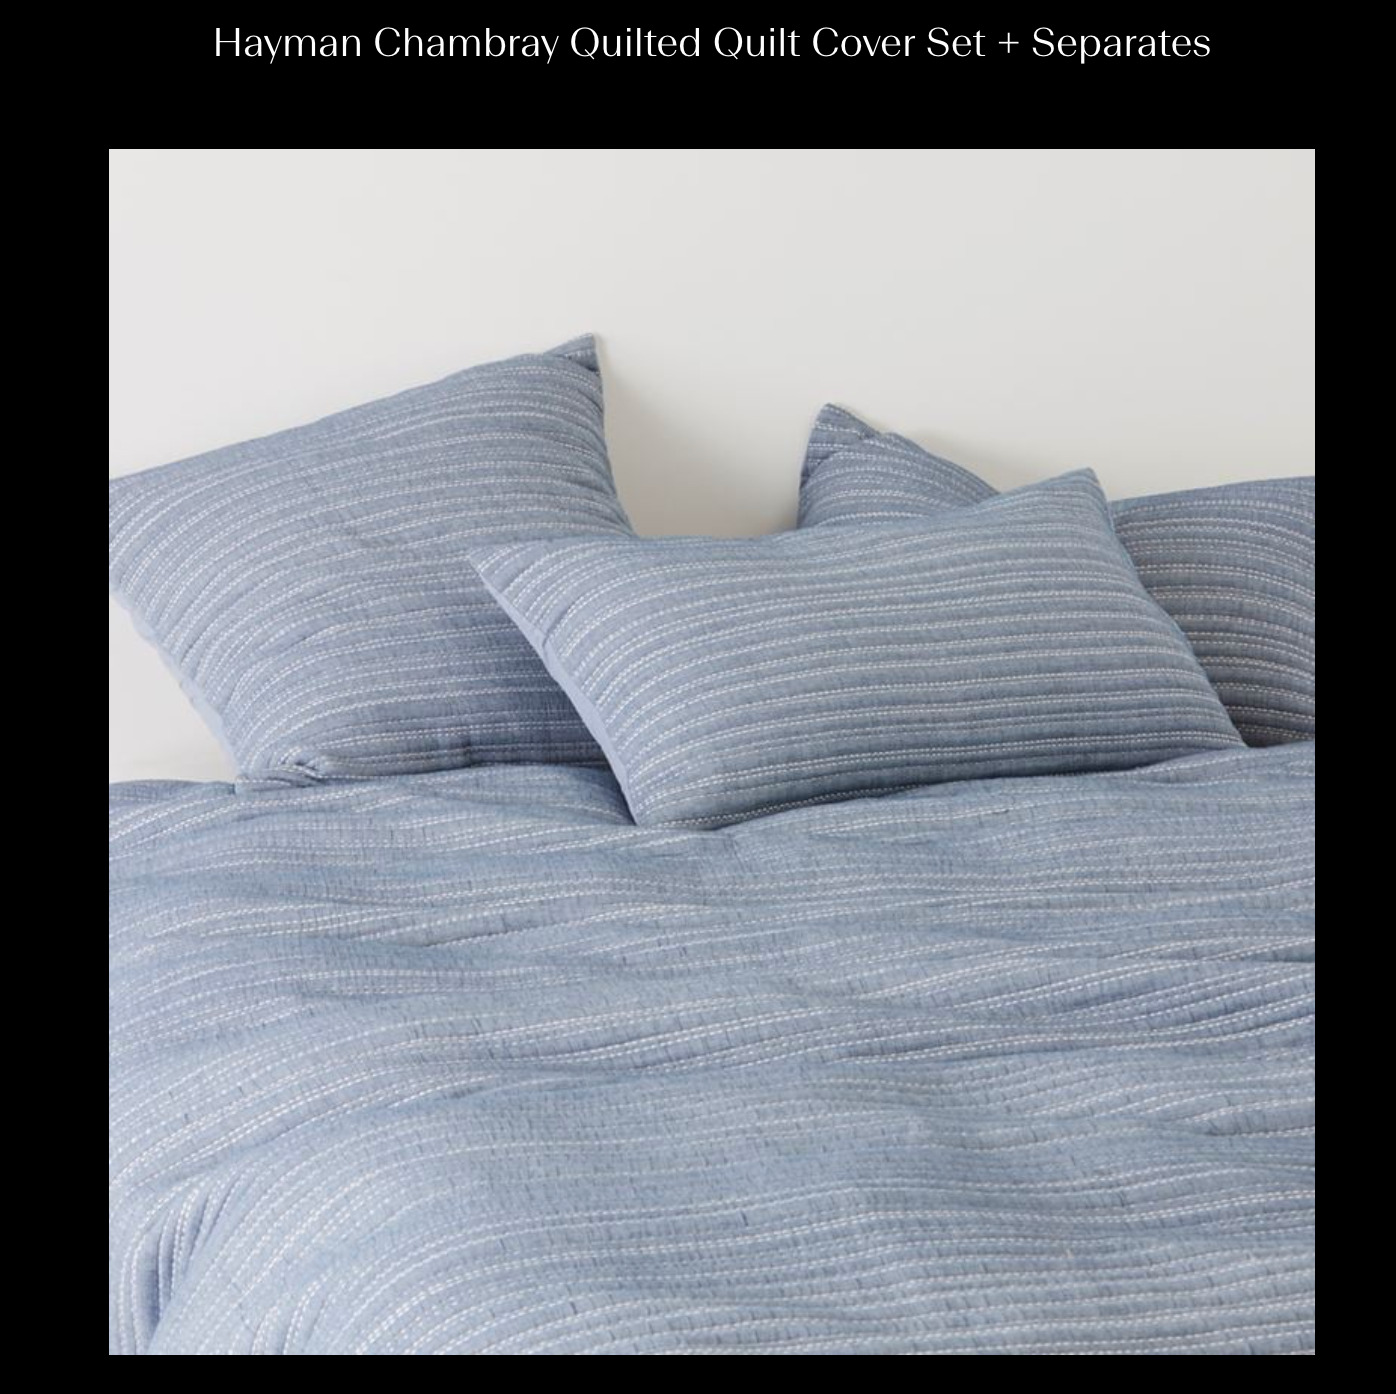 Adairs Single Quilt Cover Set HAYMAN Chambray Blue Denim $179.99